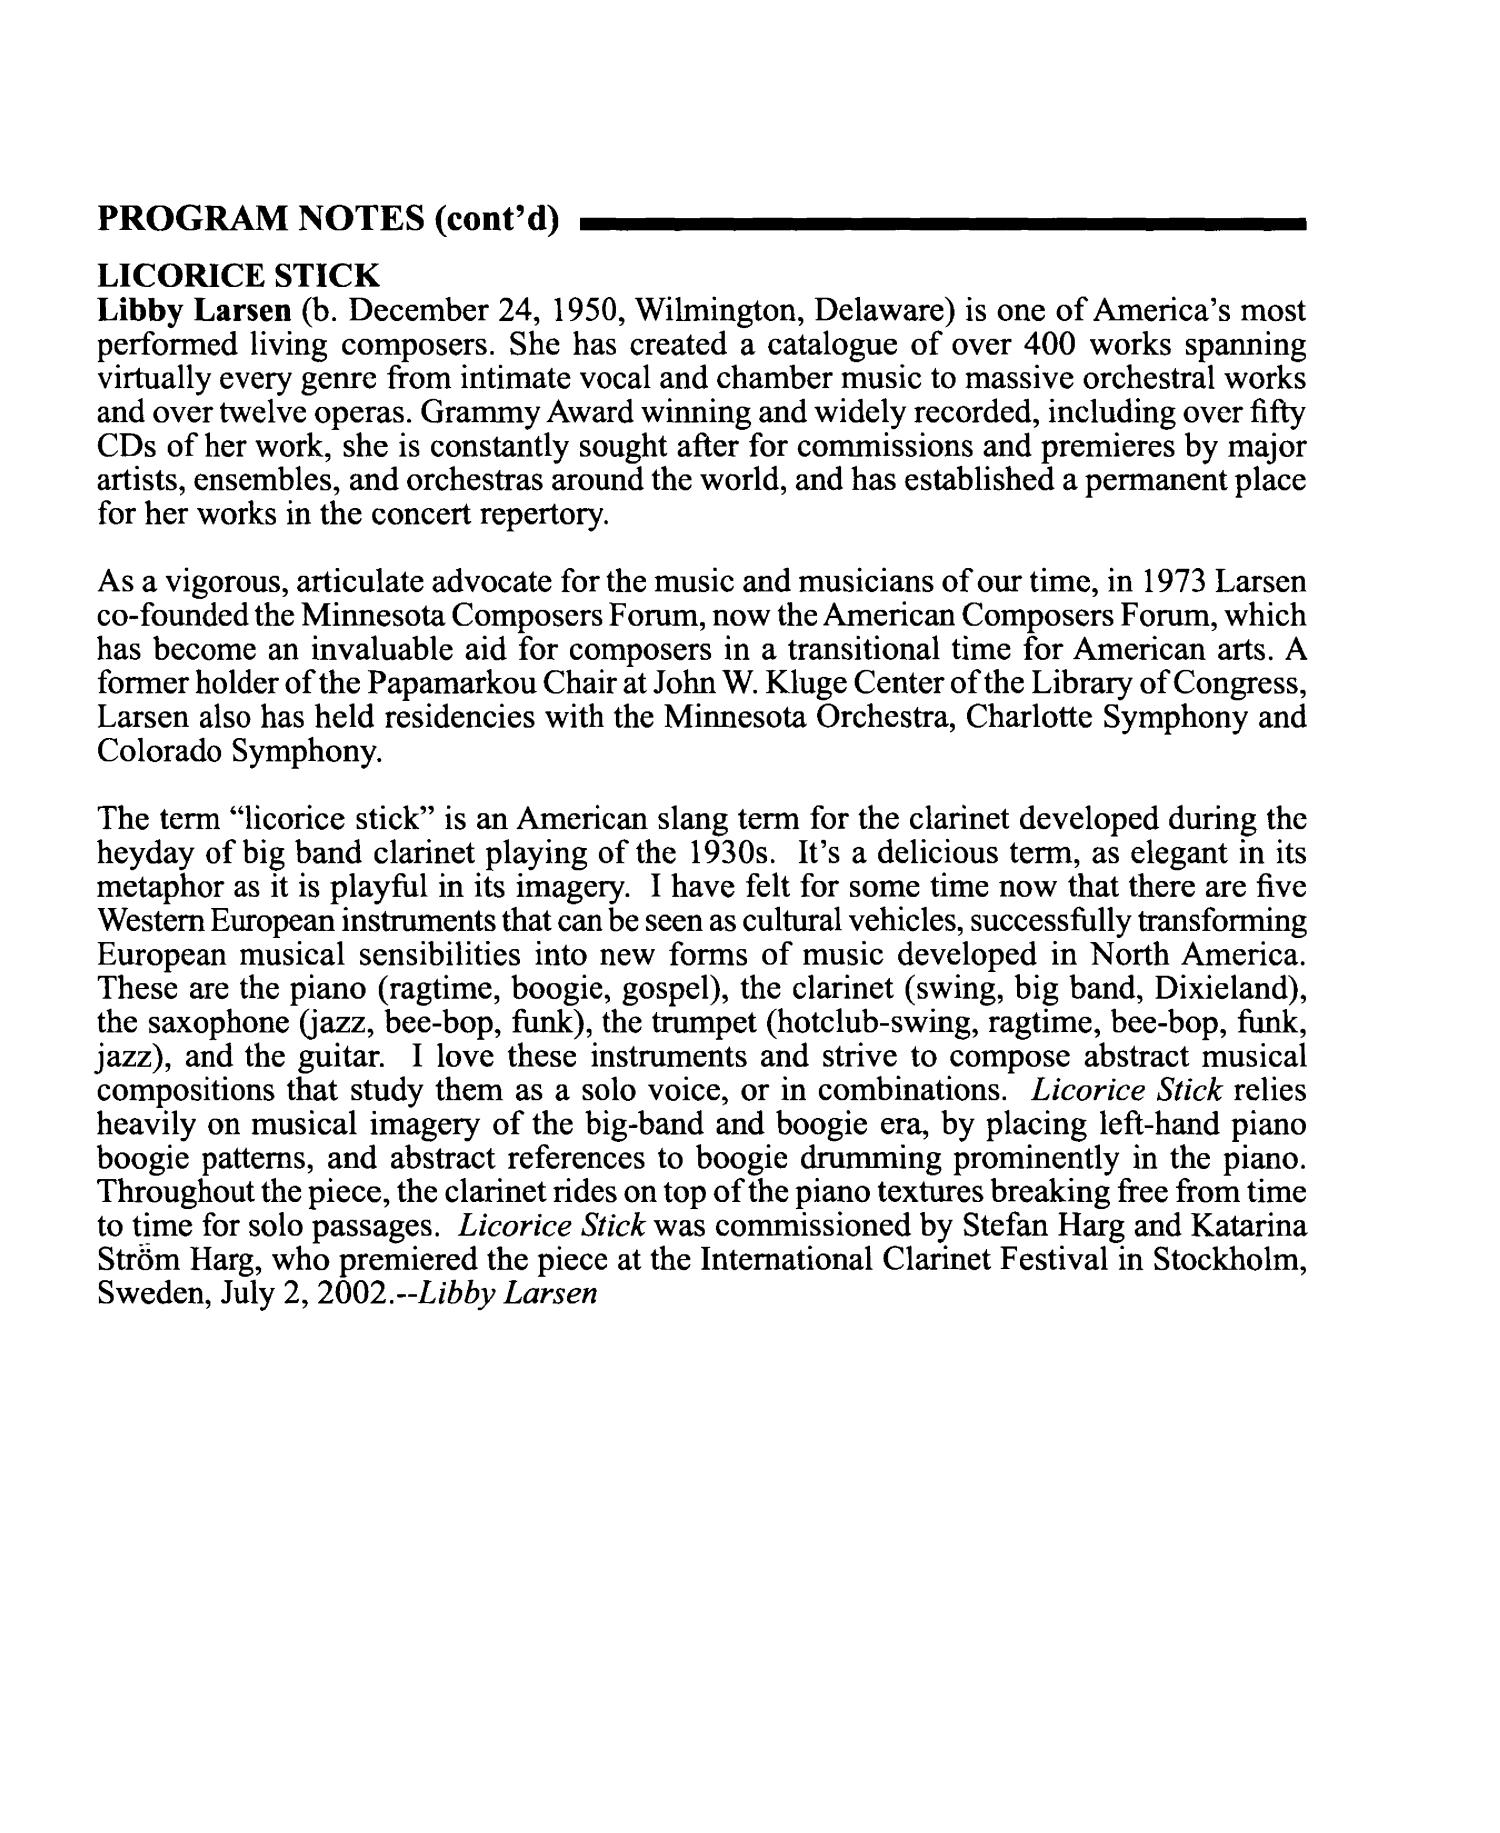 College of Music Program Book 2011-2012: Ensemble & Other Performances, Volume 1
                                                
                                                    445
                                                